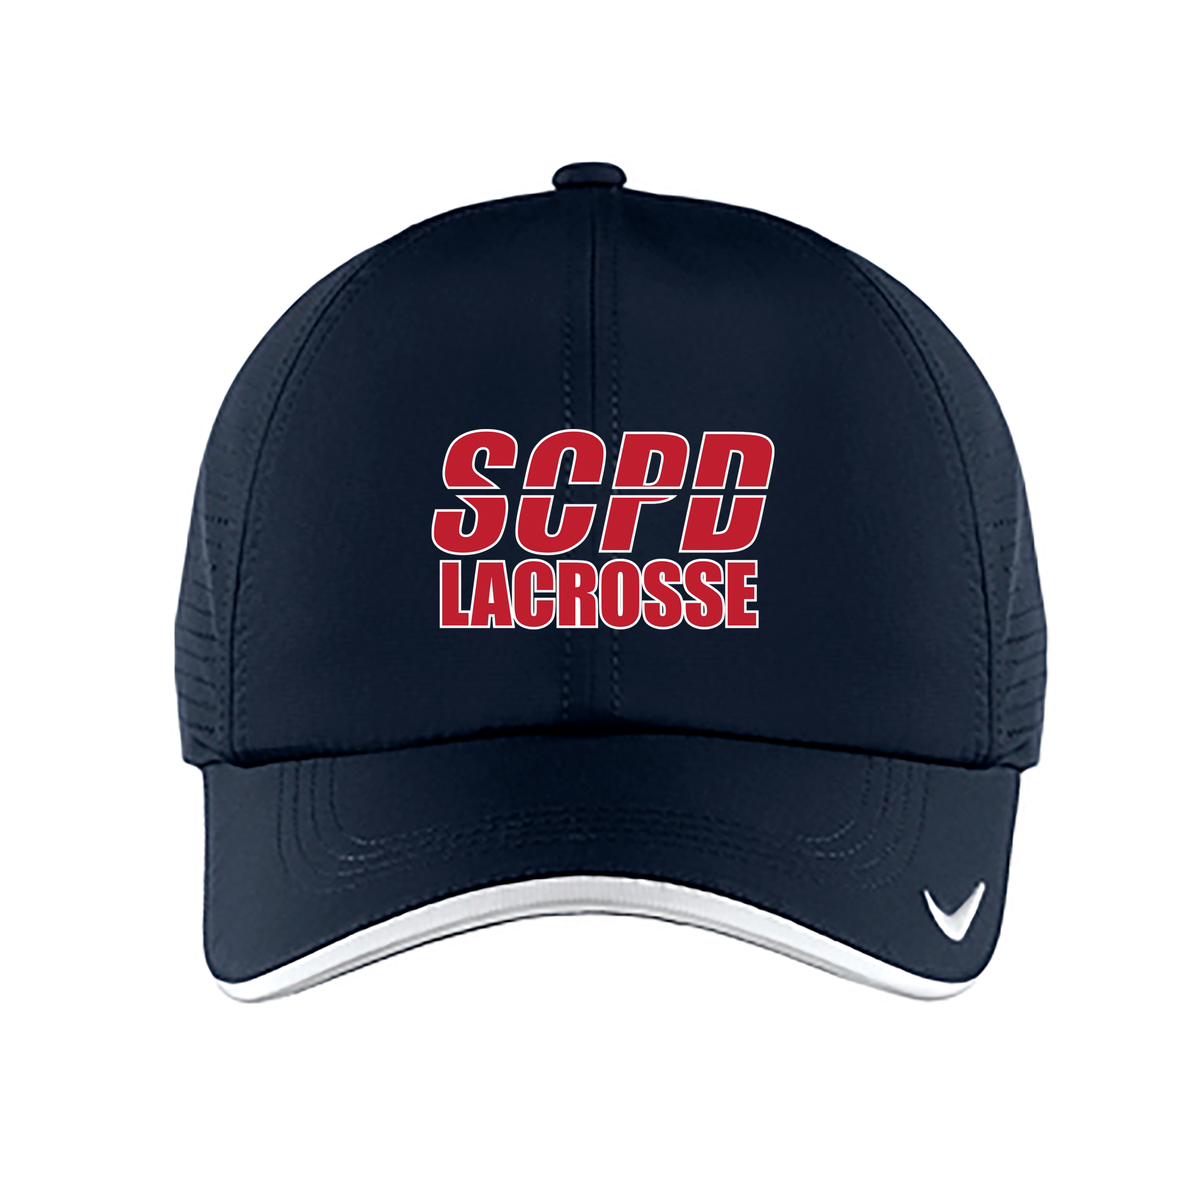 SCPD Lacrosse Nike Dri-FIT Swoosh Perforated Cap